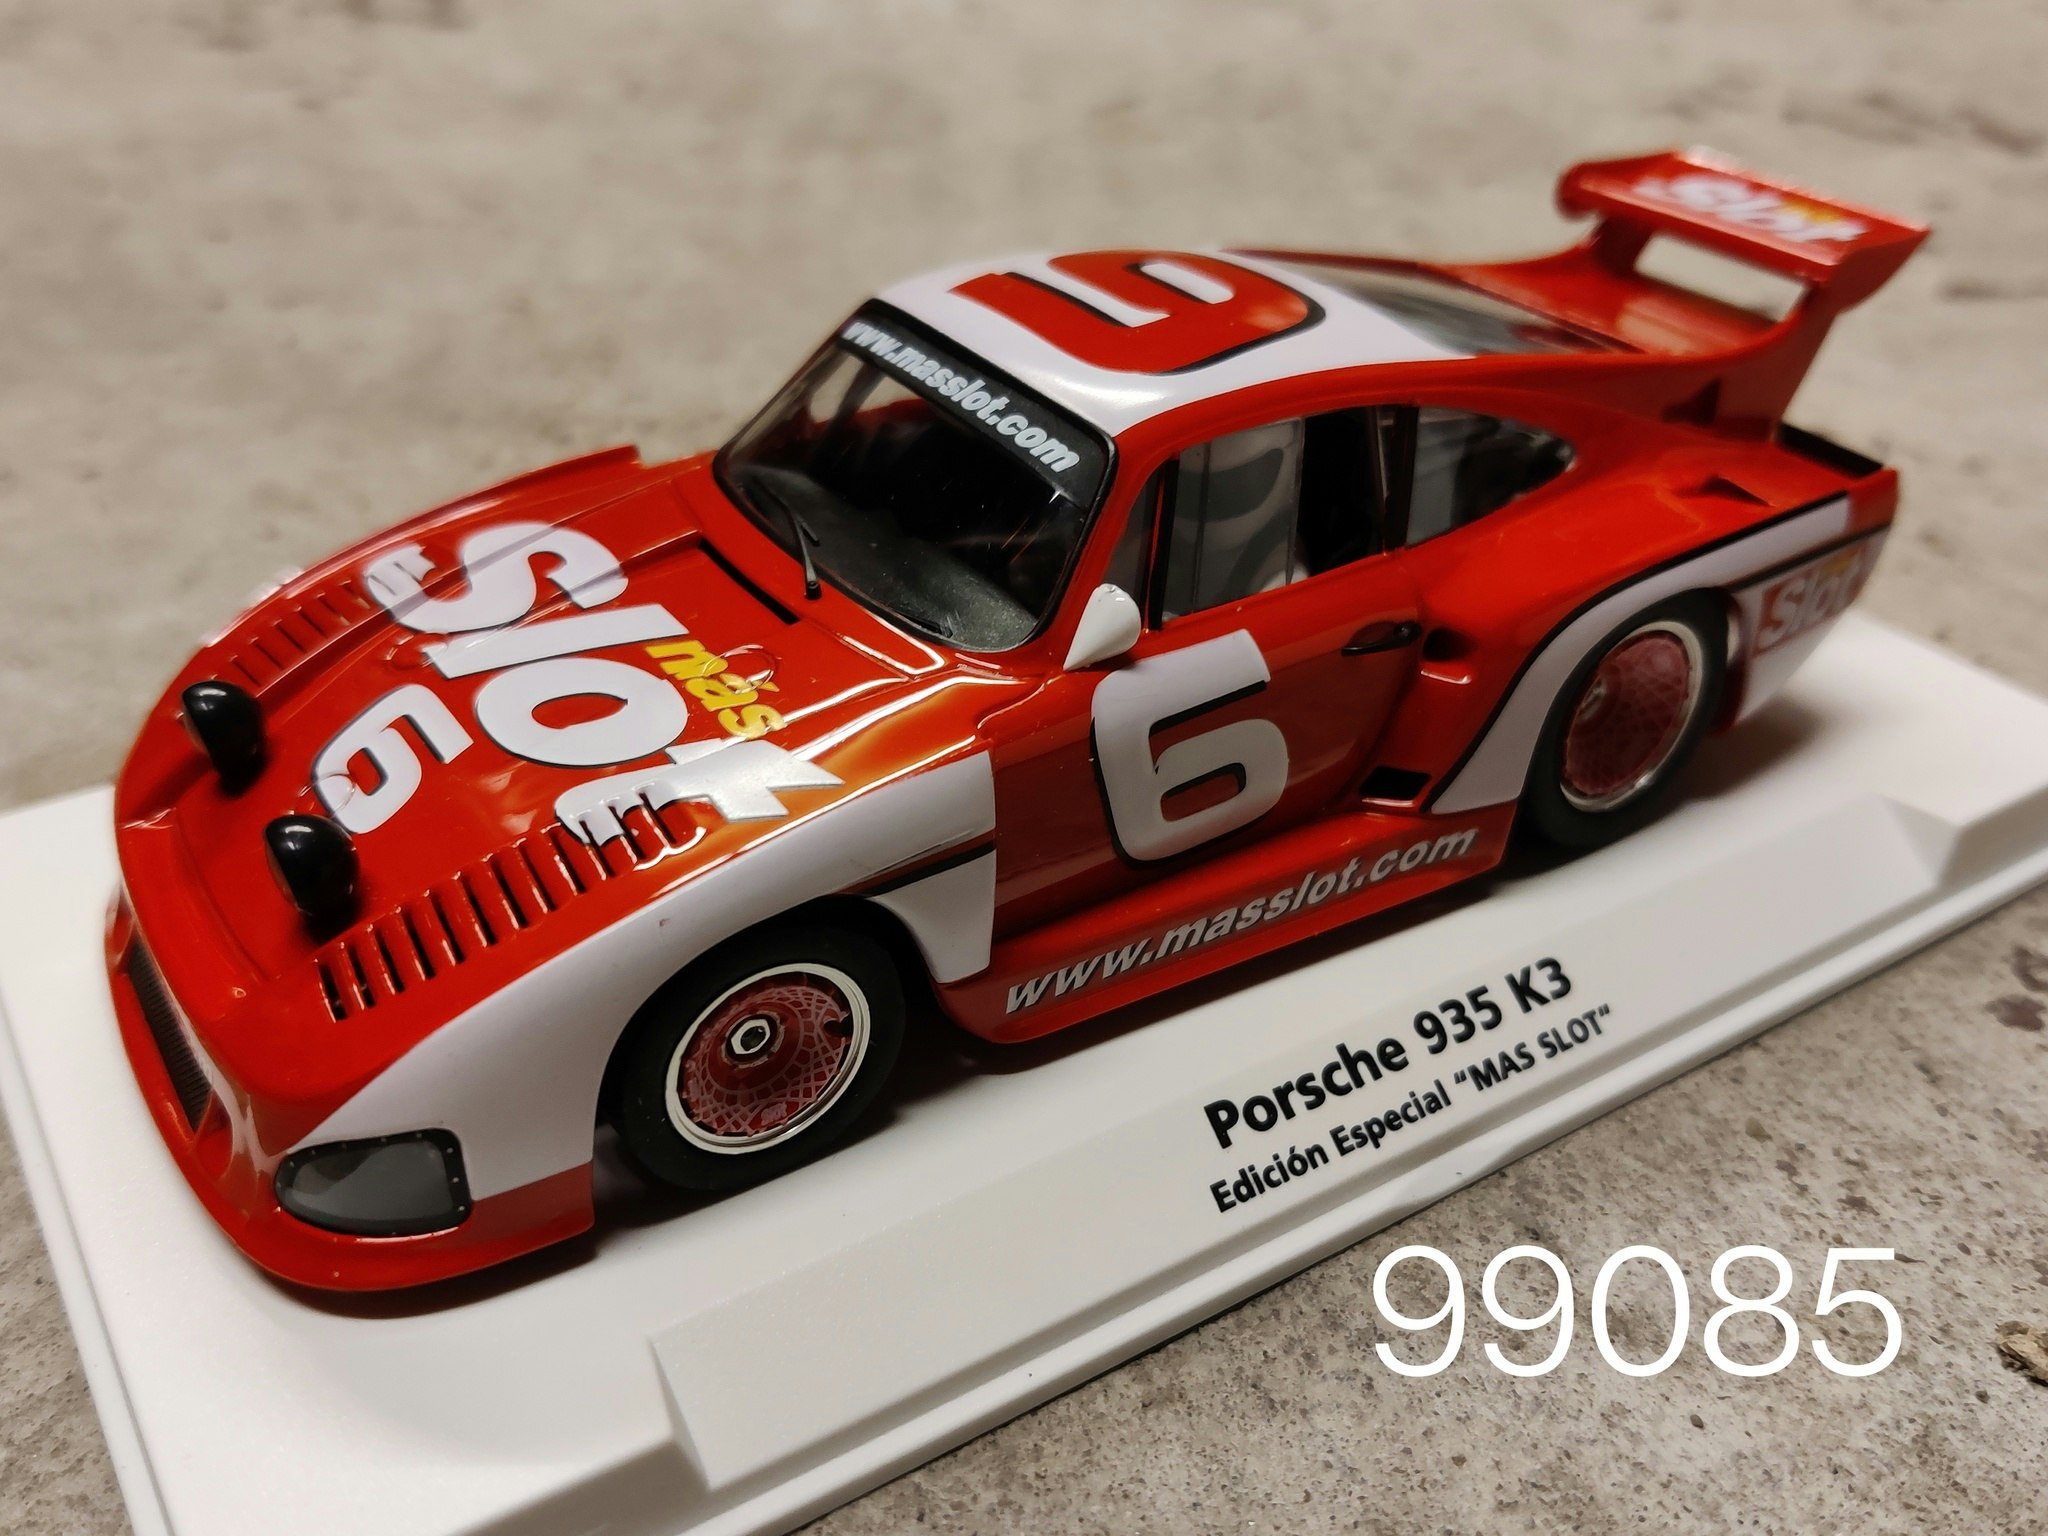 FLY Car Model - Porsche 935 K3 - Special Edition Magazine MAS SLOT